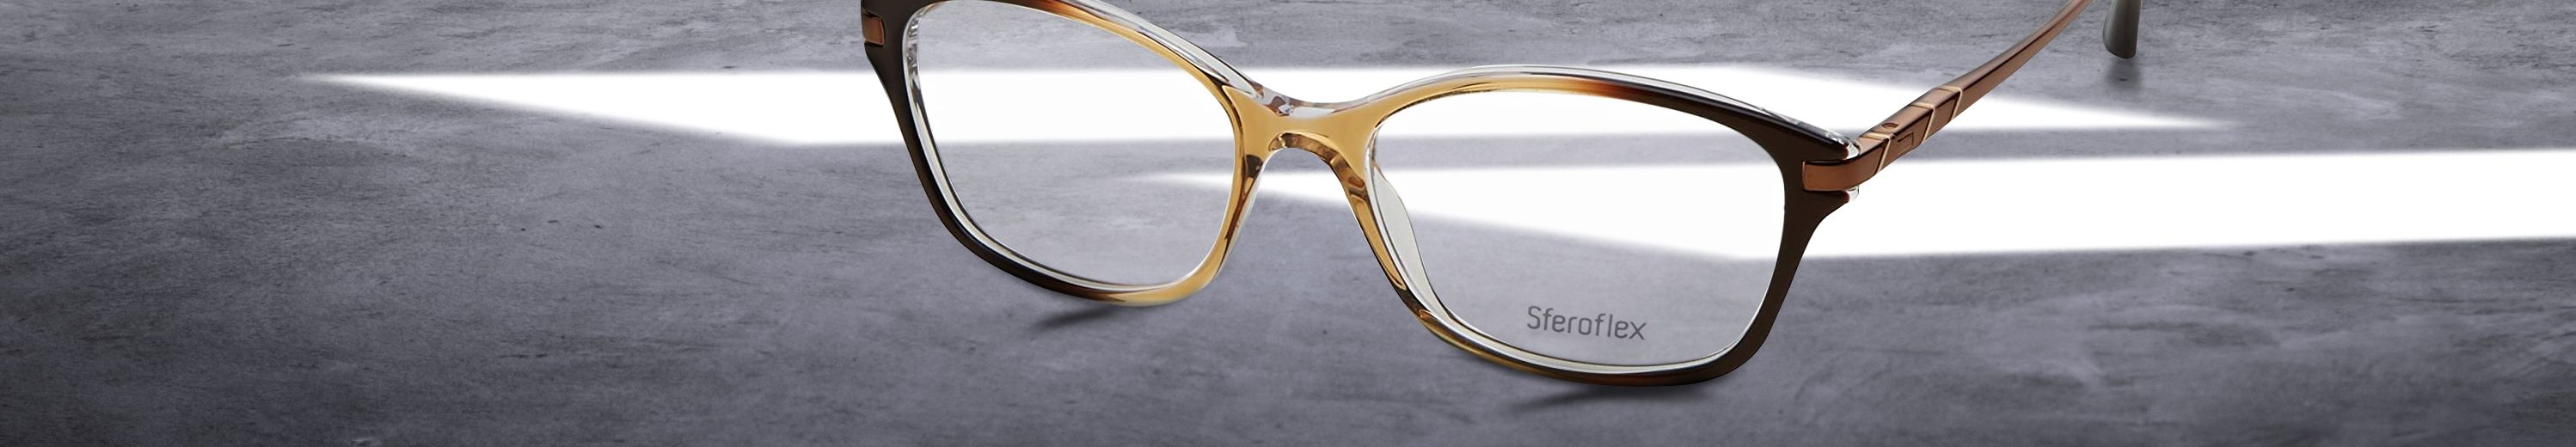 Sferoflex Glasses and Eyewear